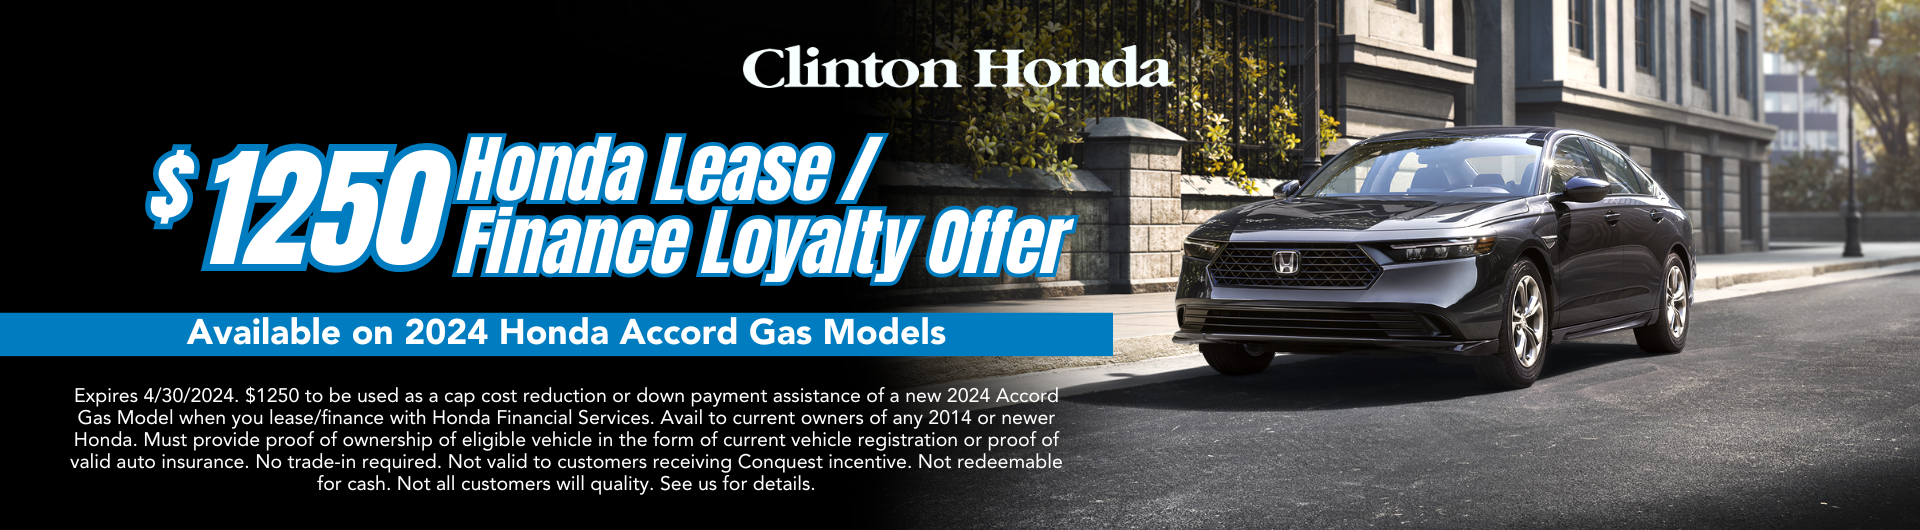 2024 Honda Accord gas models